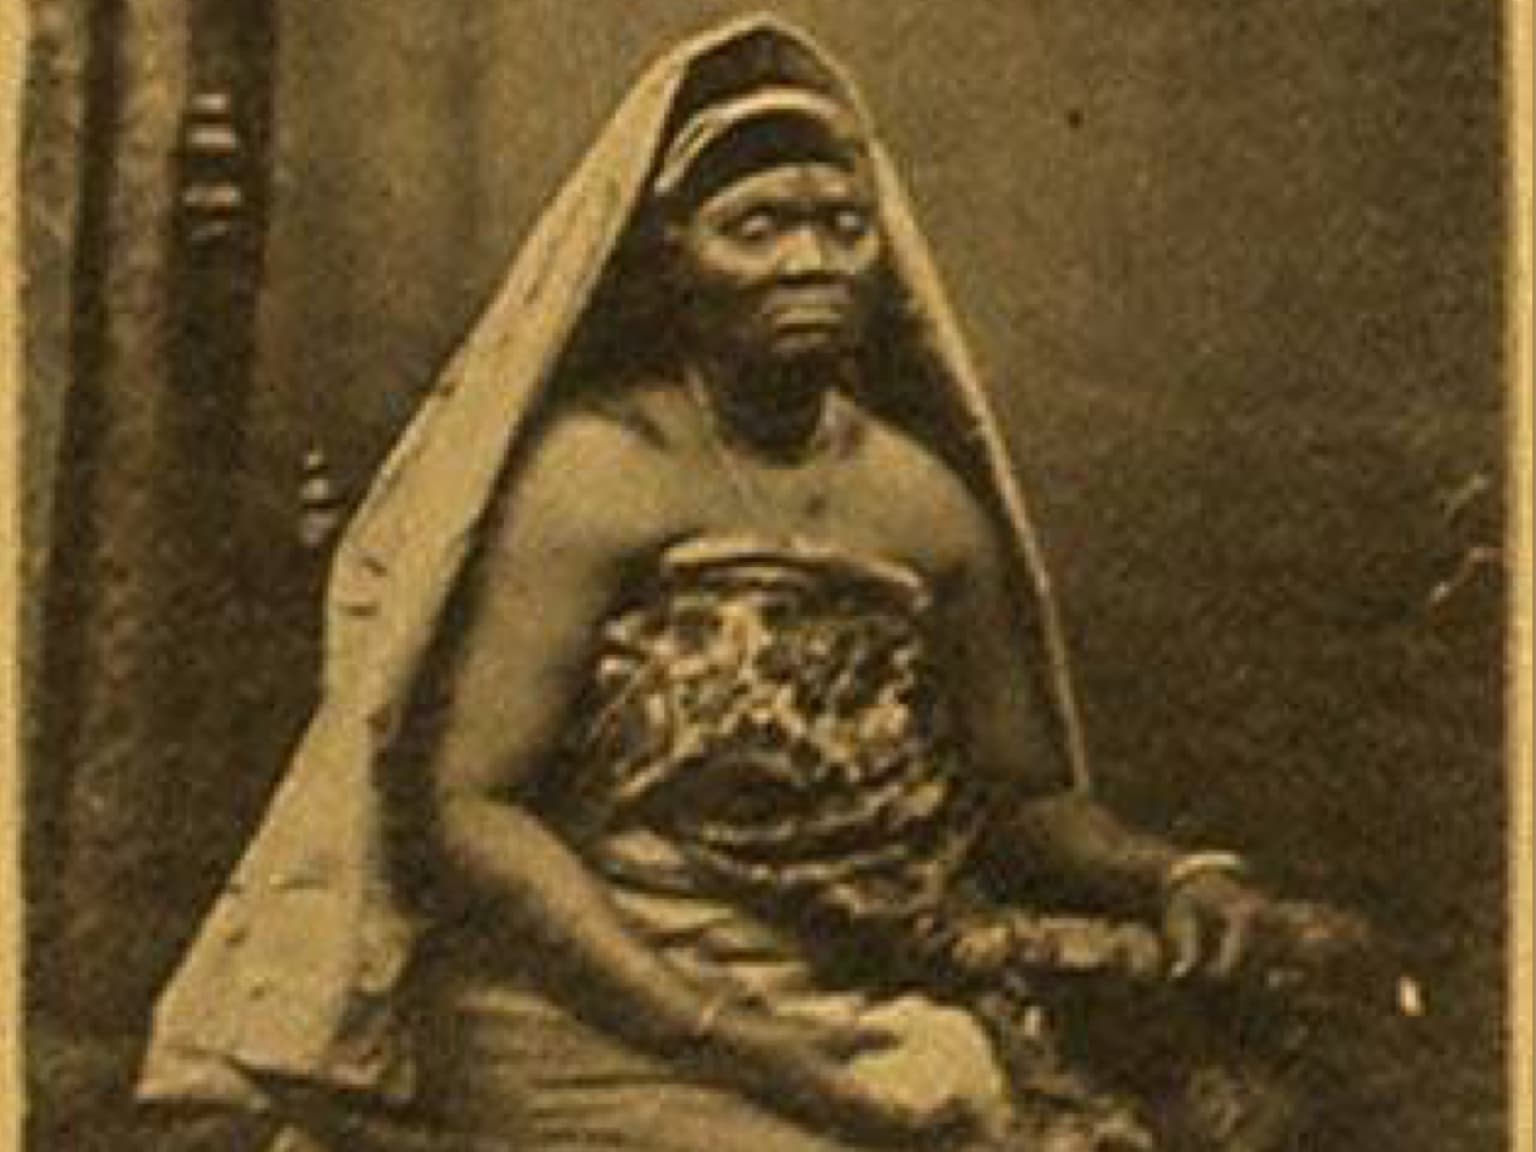 Most powerful slave trader in Nigeria 